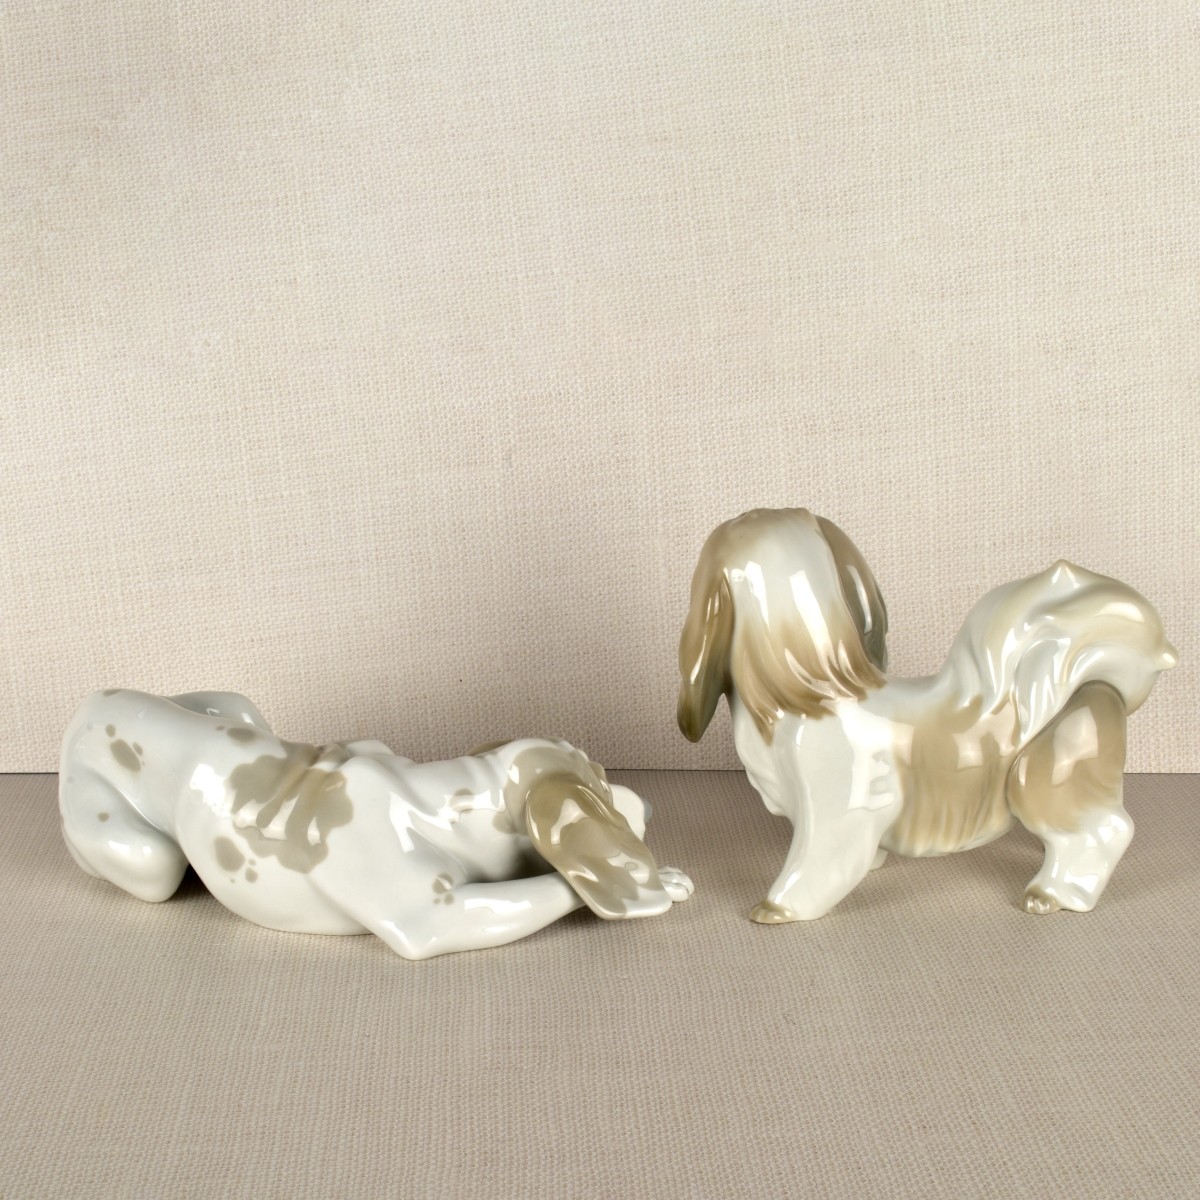 Two Lladro Dog Figurines